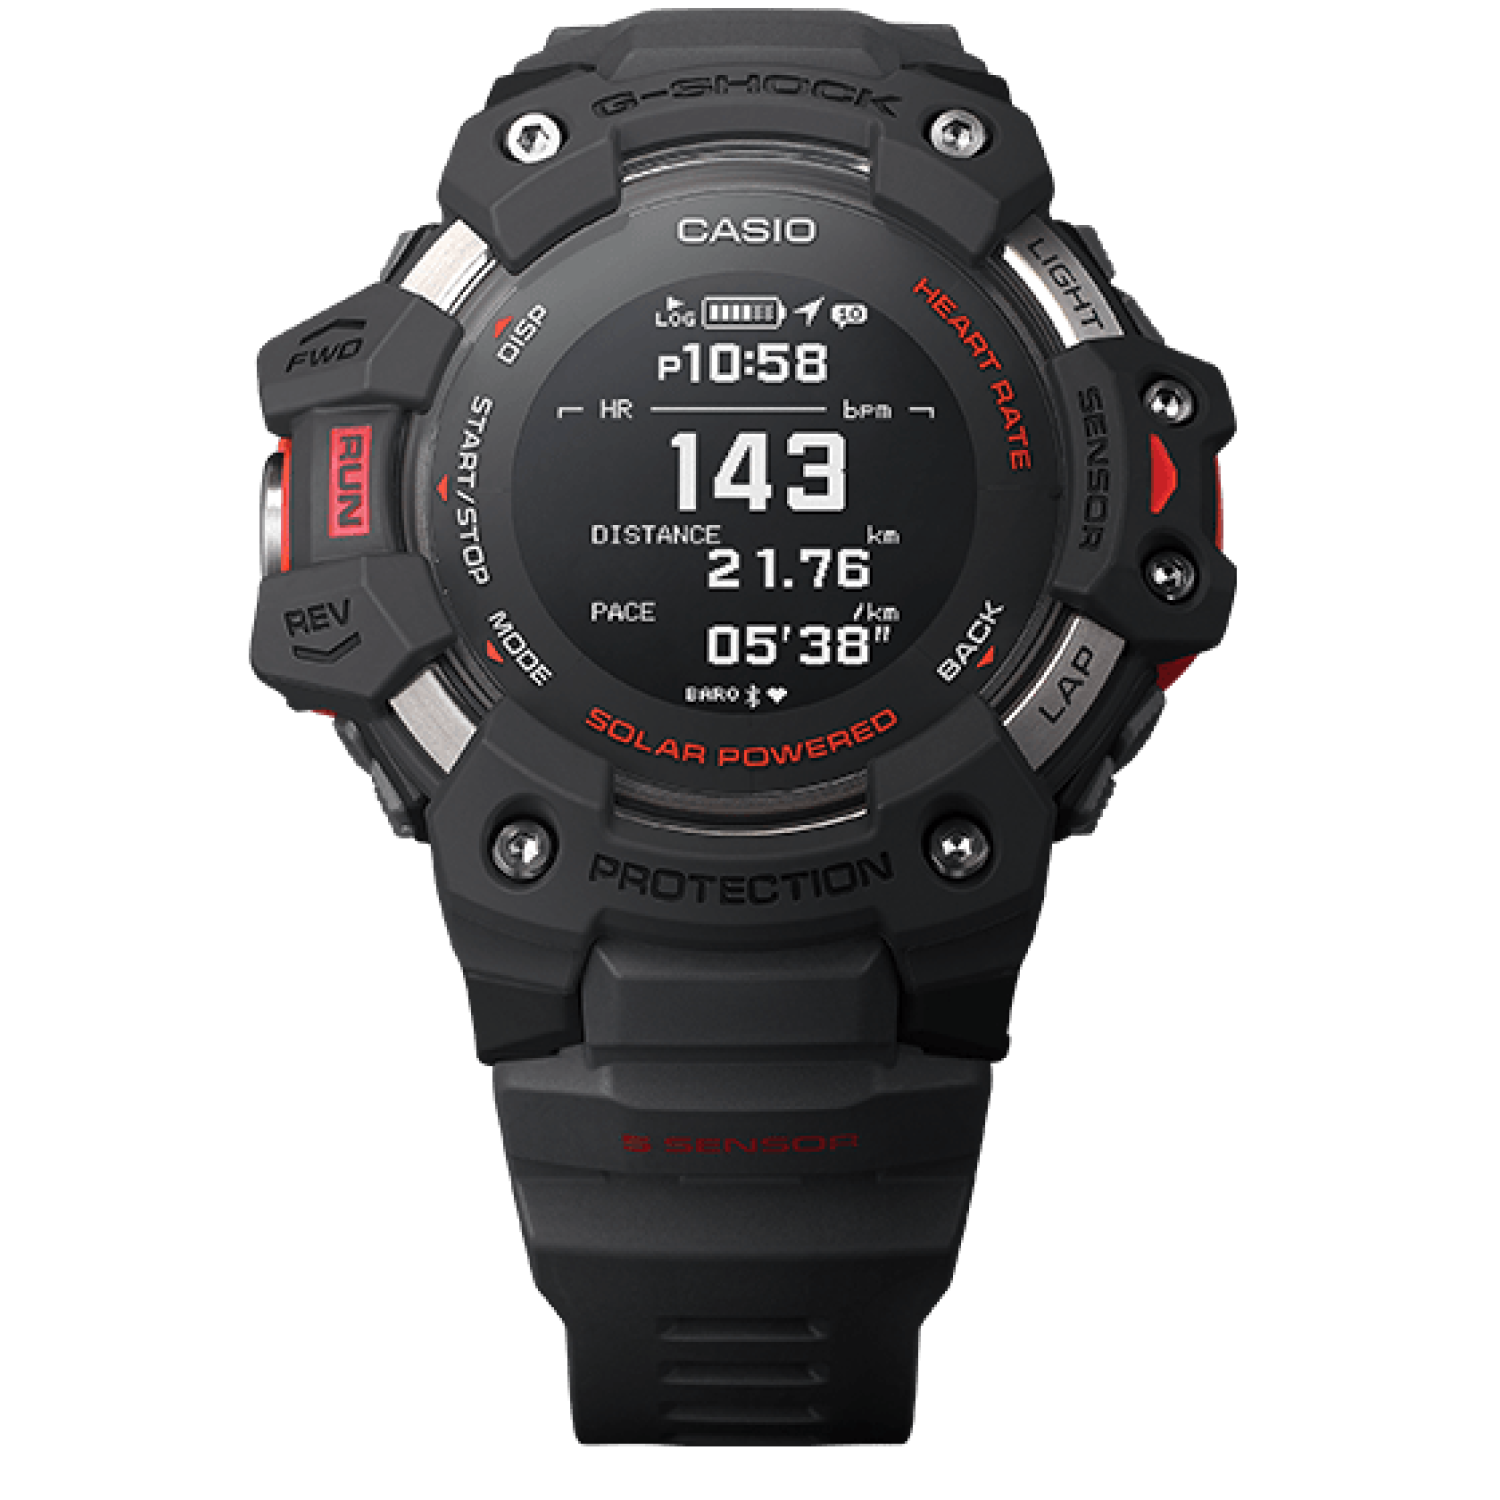 GBDH1000-8D G-Shock G-SQUAD GPS HRM Watch.casio watches nz sale $649.00